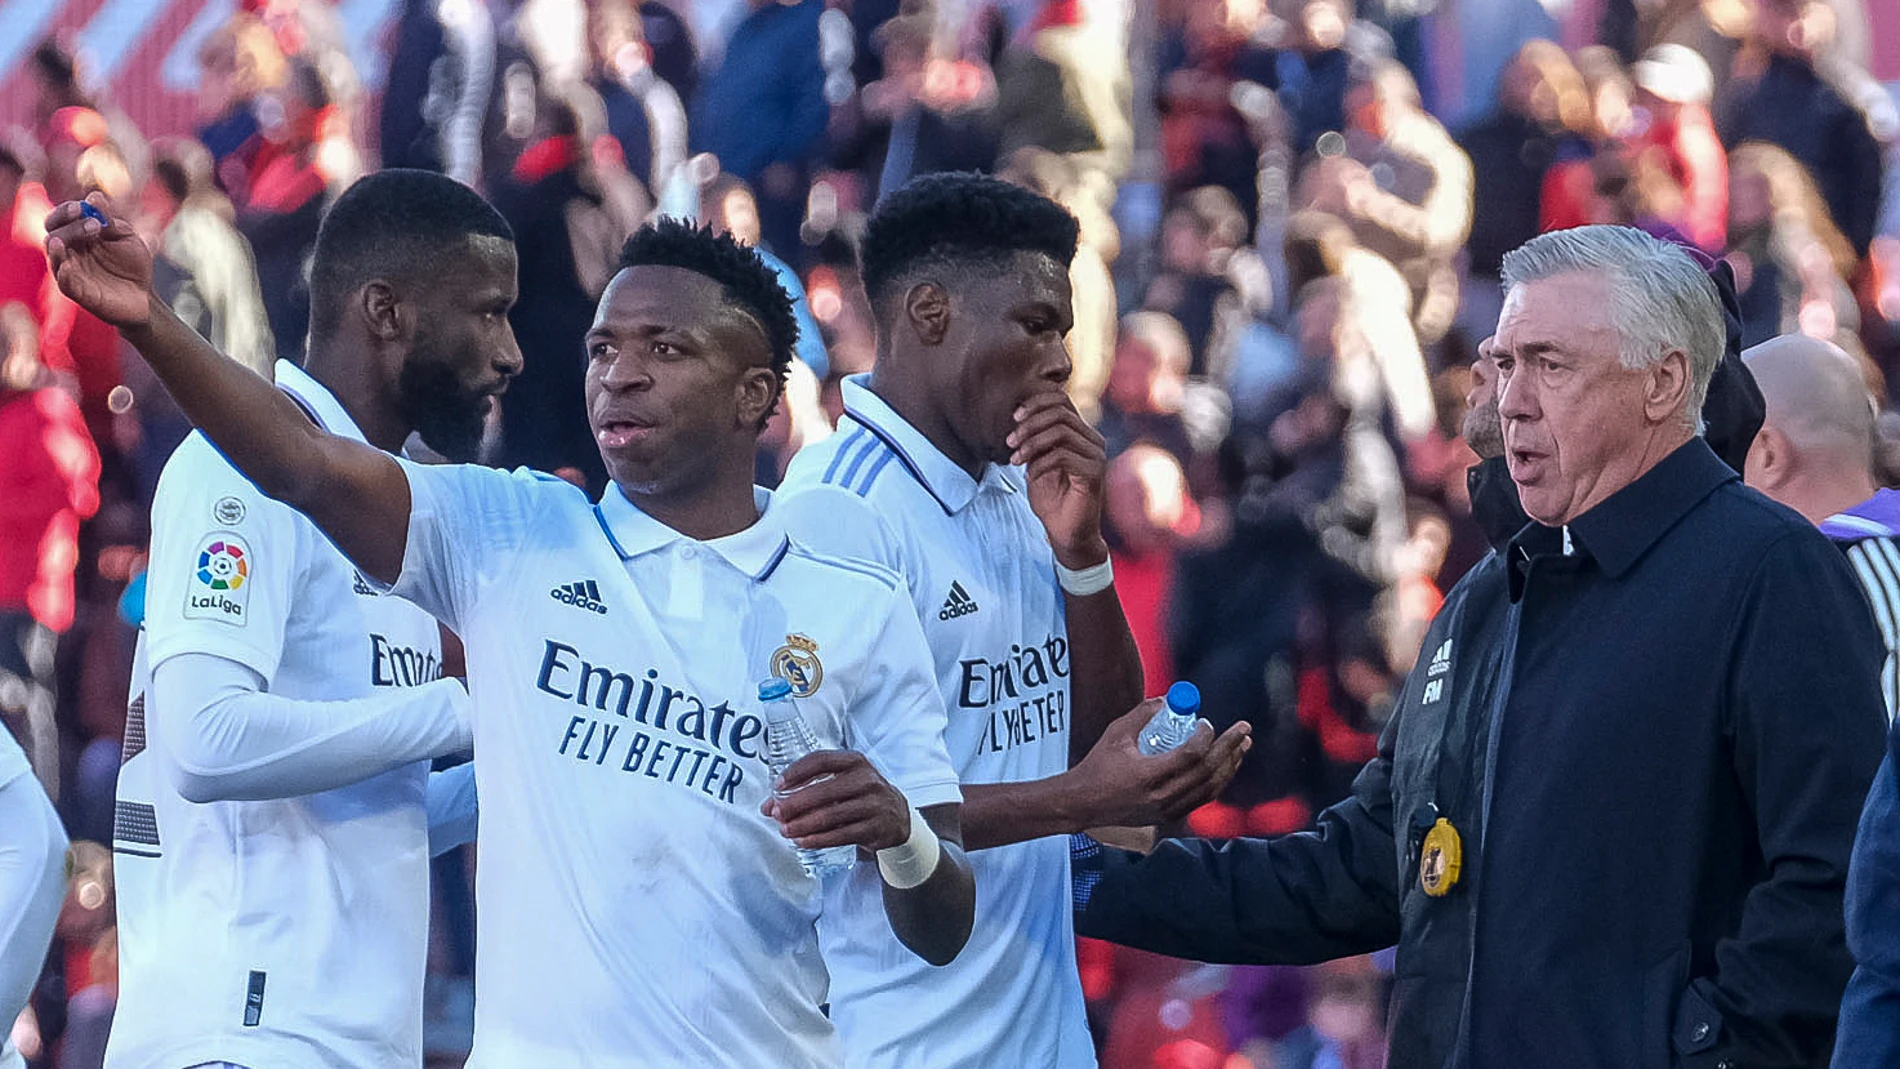 Ancelotti da indicaciones a sus jugadores en el Mallorca - Real Madrid